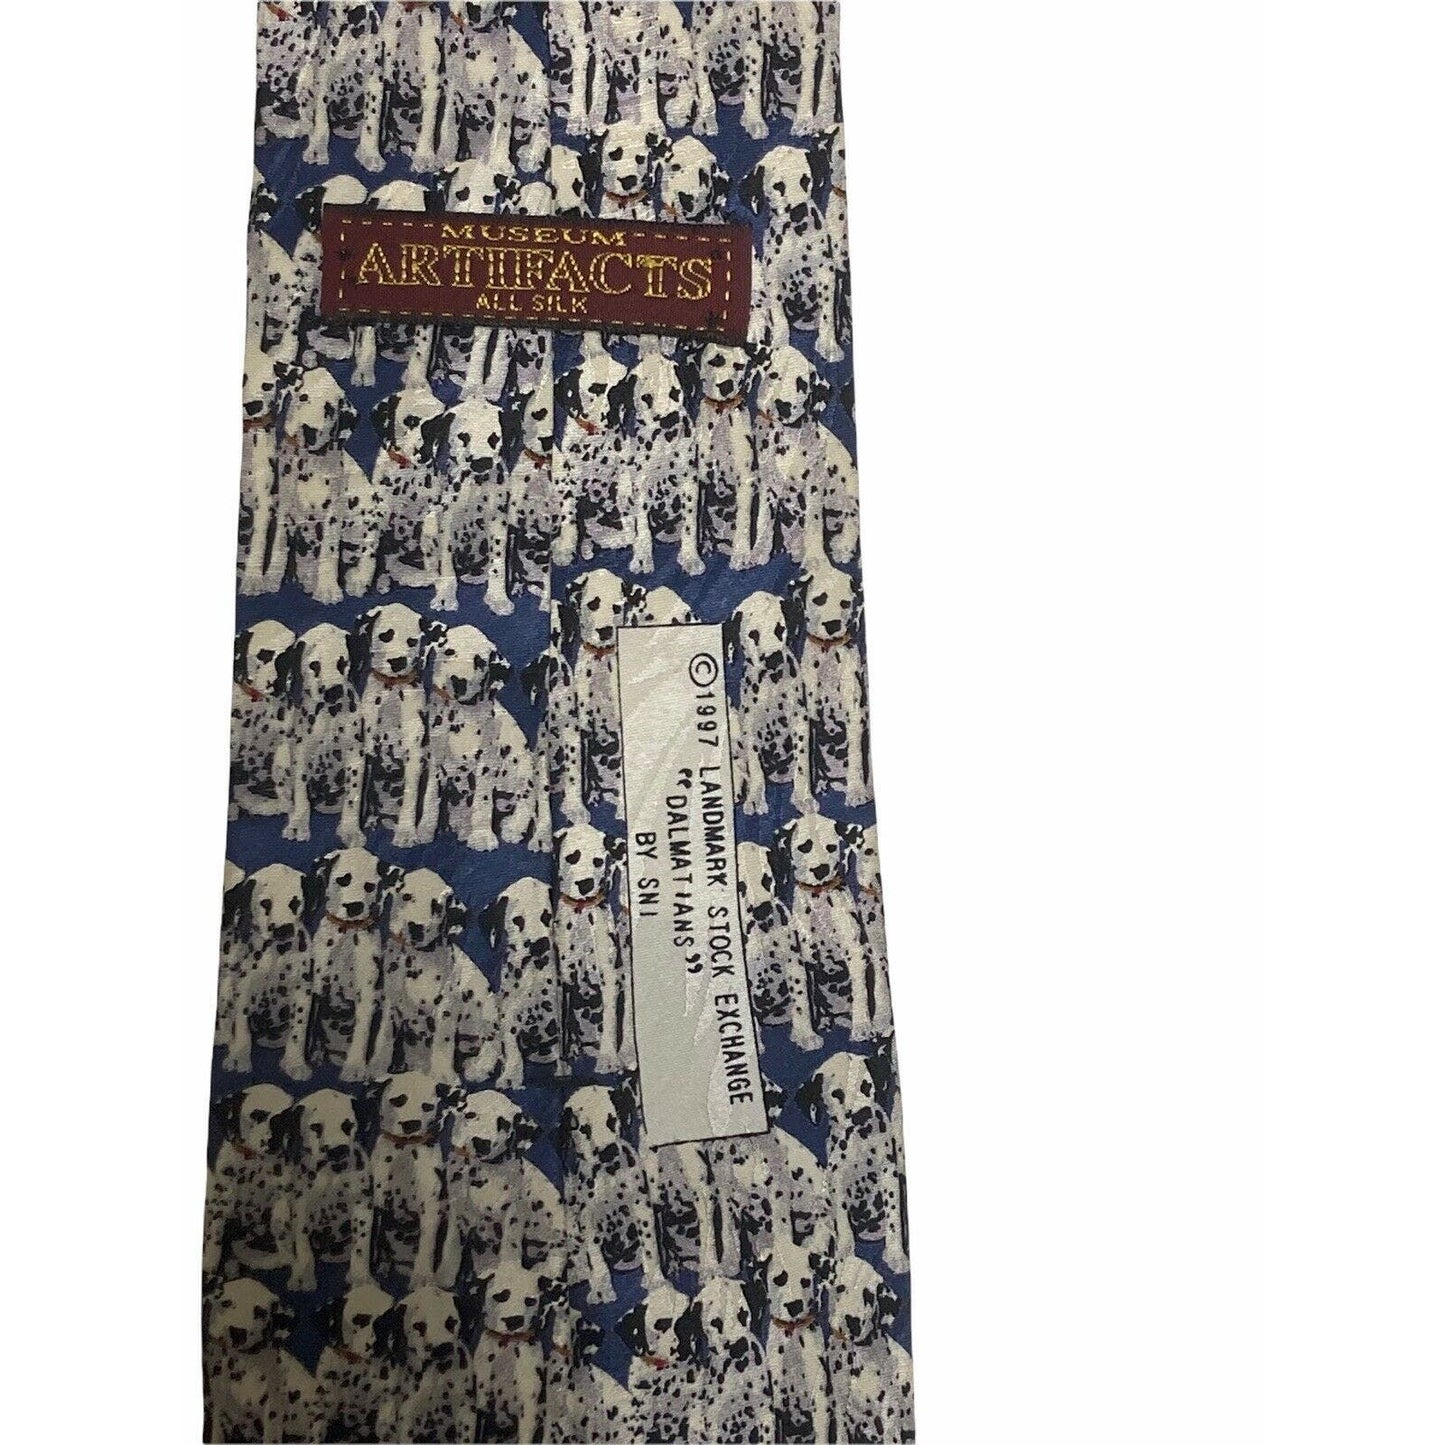 Museum Artifacts Dalmatians Dogs Puppy Vintage Novelty Necktie